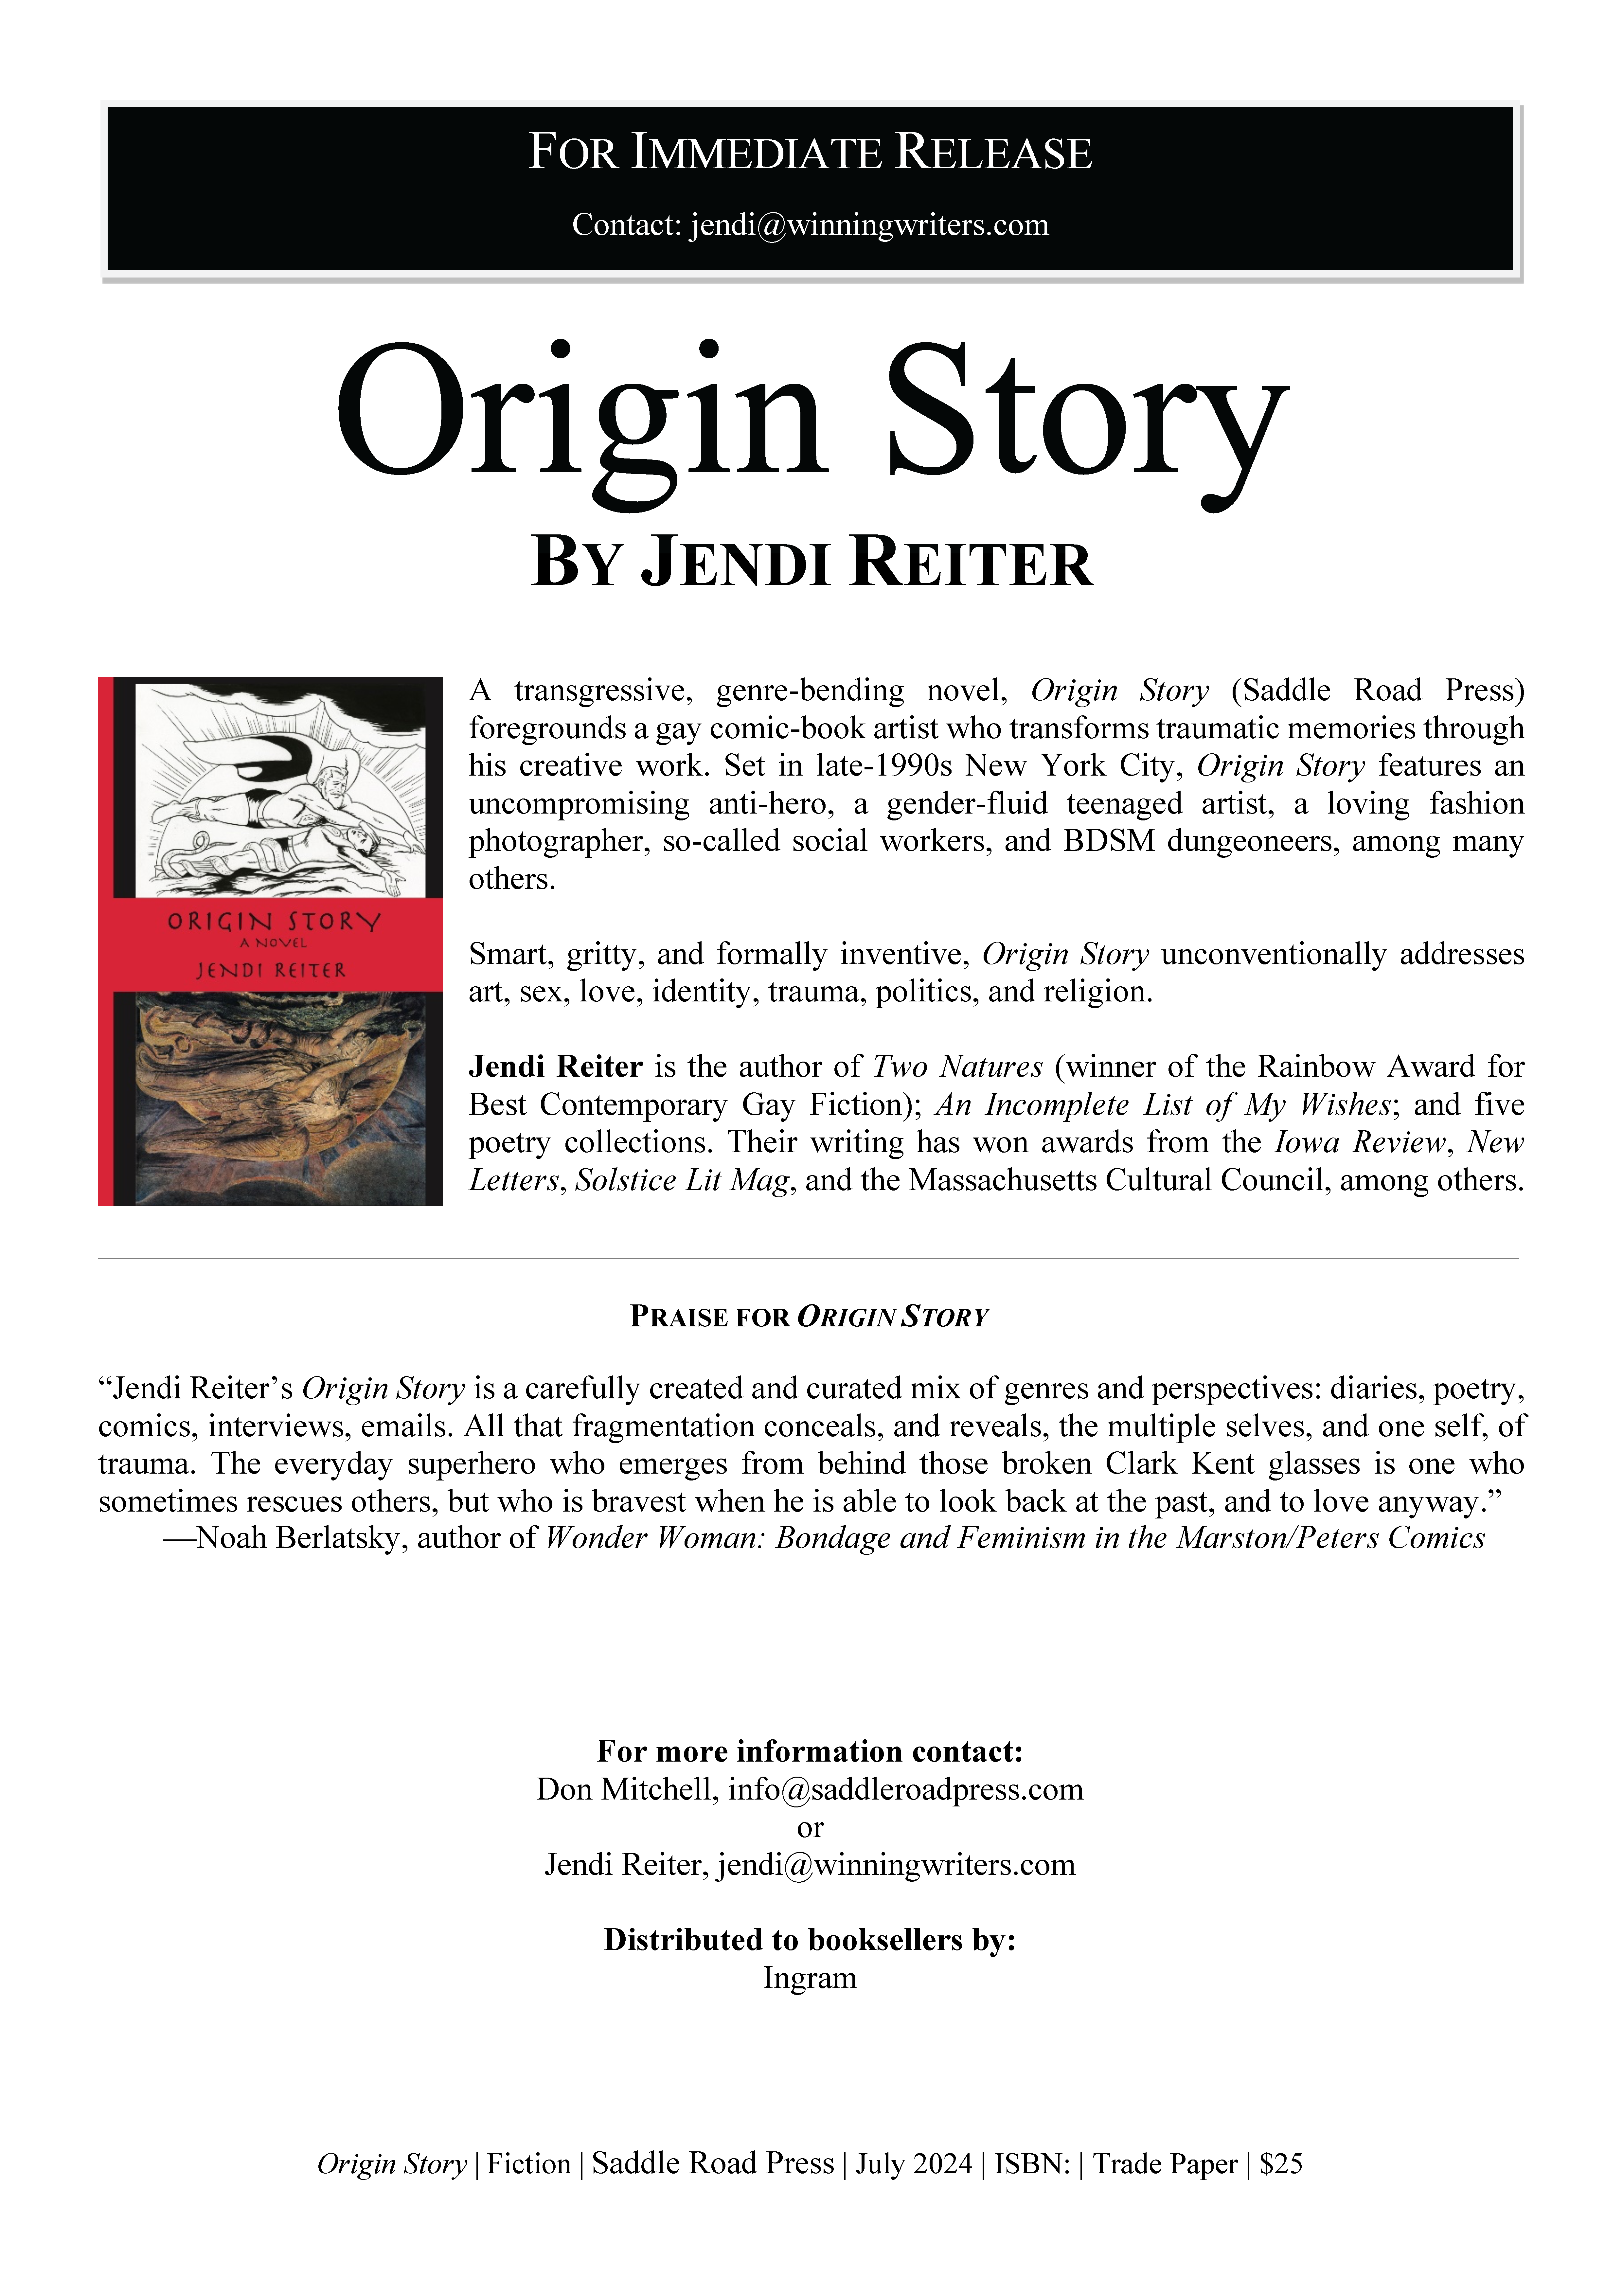 Origin Story by Jendi Reiter